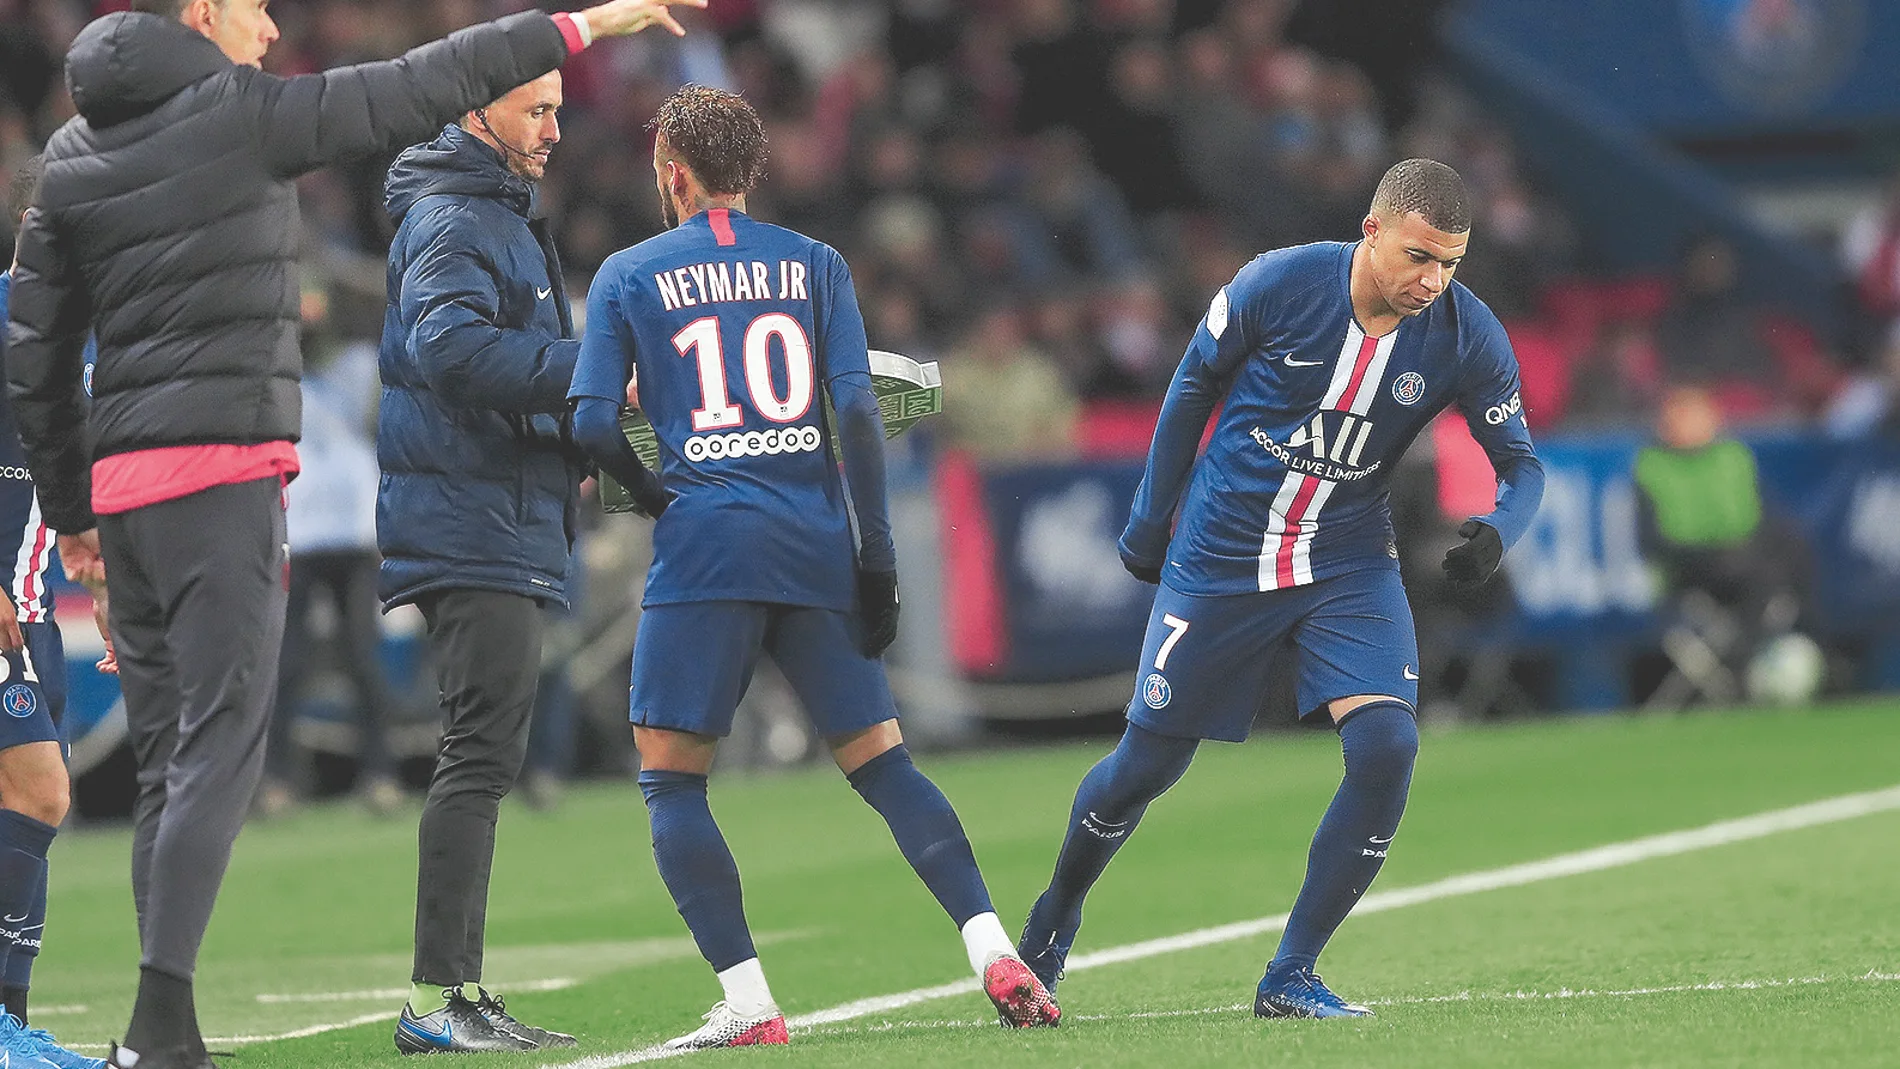 Mbappé sustituye a Neymar en el partido contra el Lille